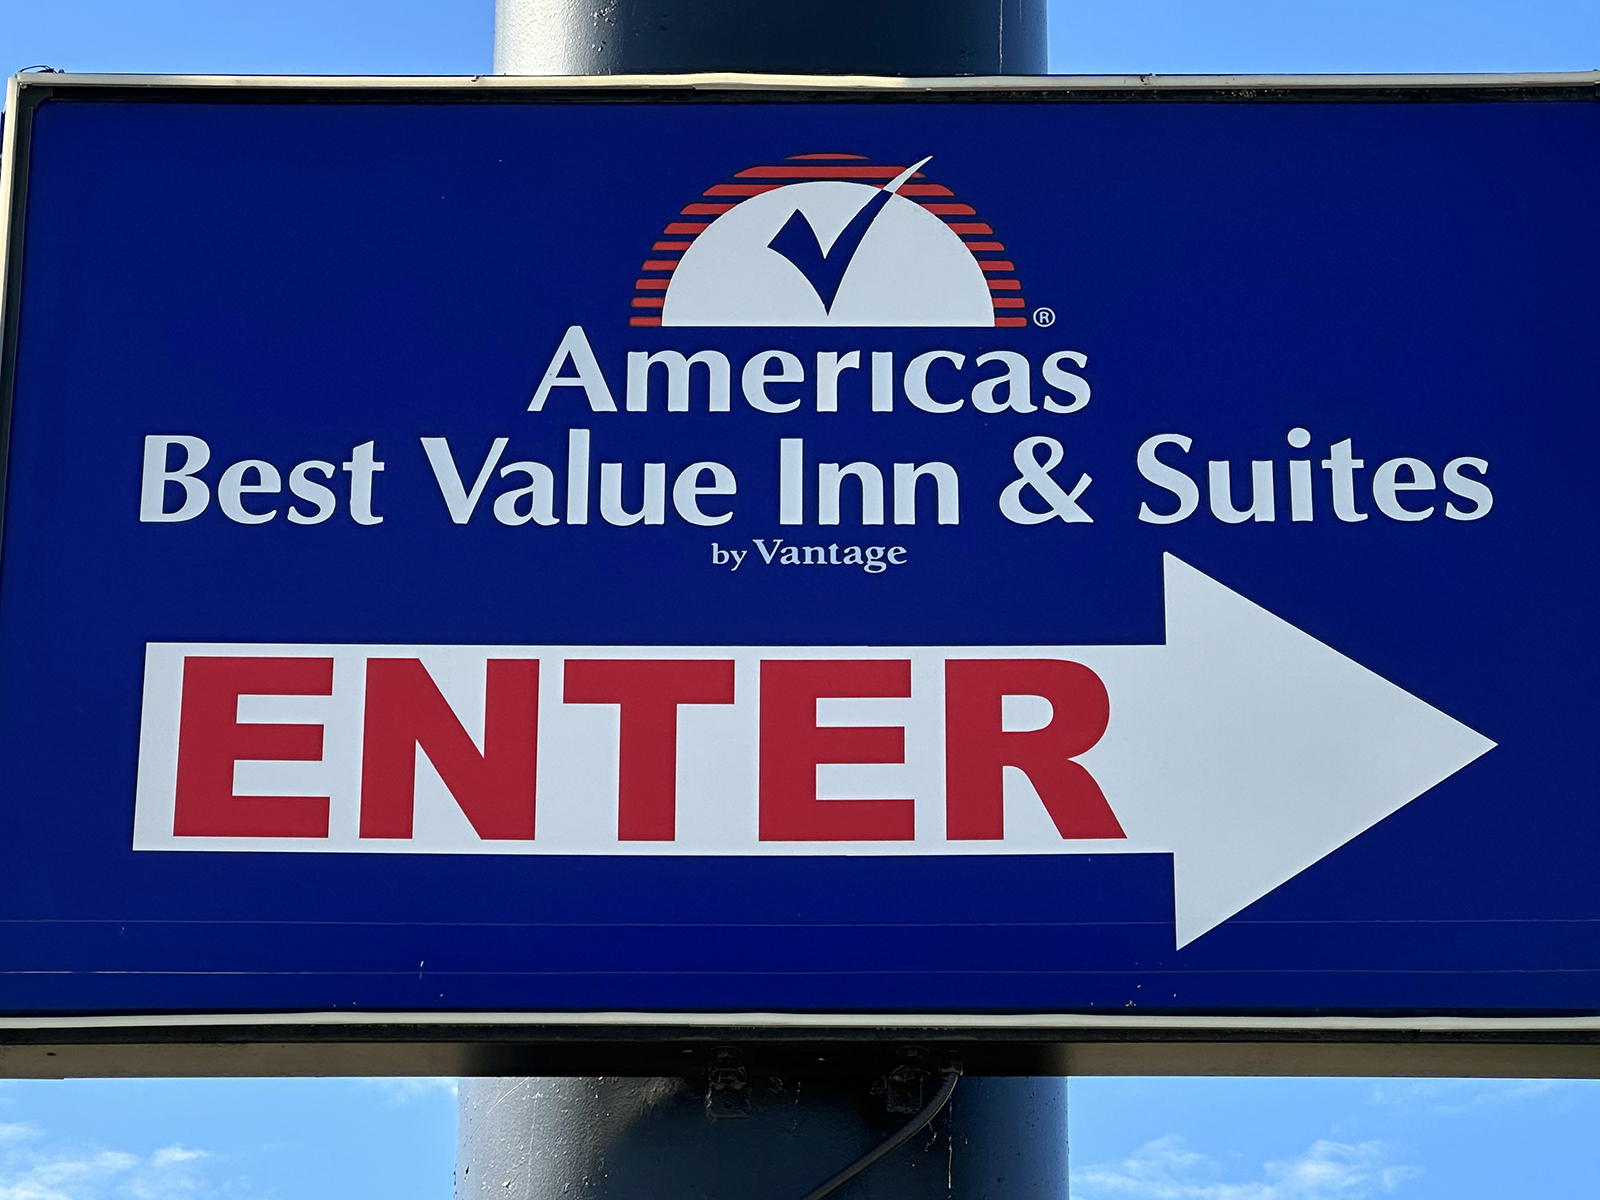 Americas Best Value Inn & Suites Groves Port Arthur - Exterior Signage